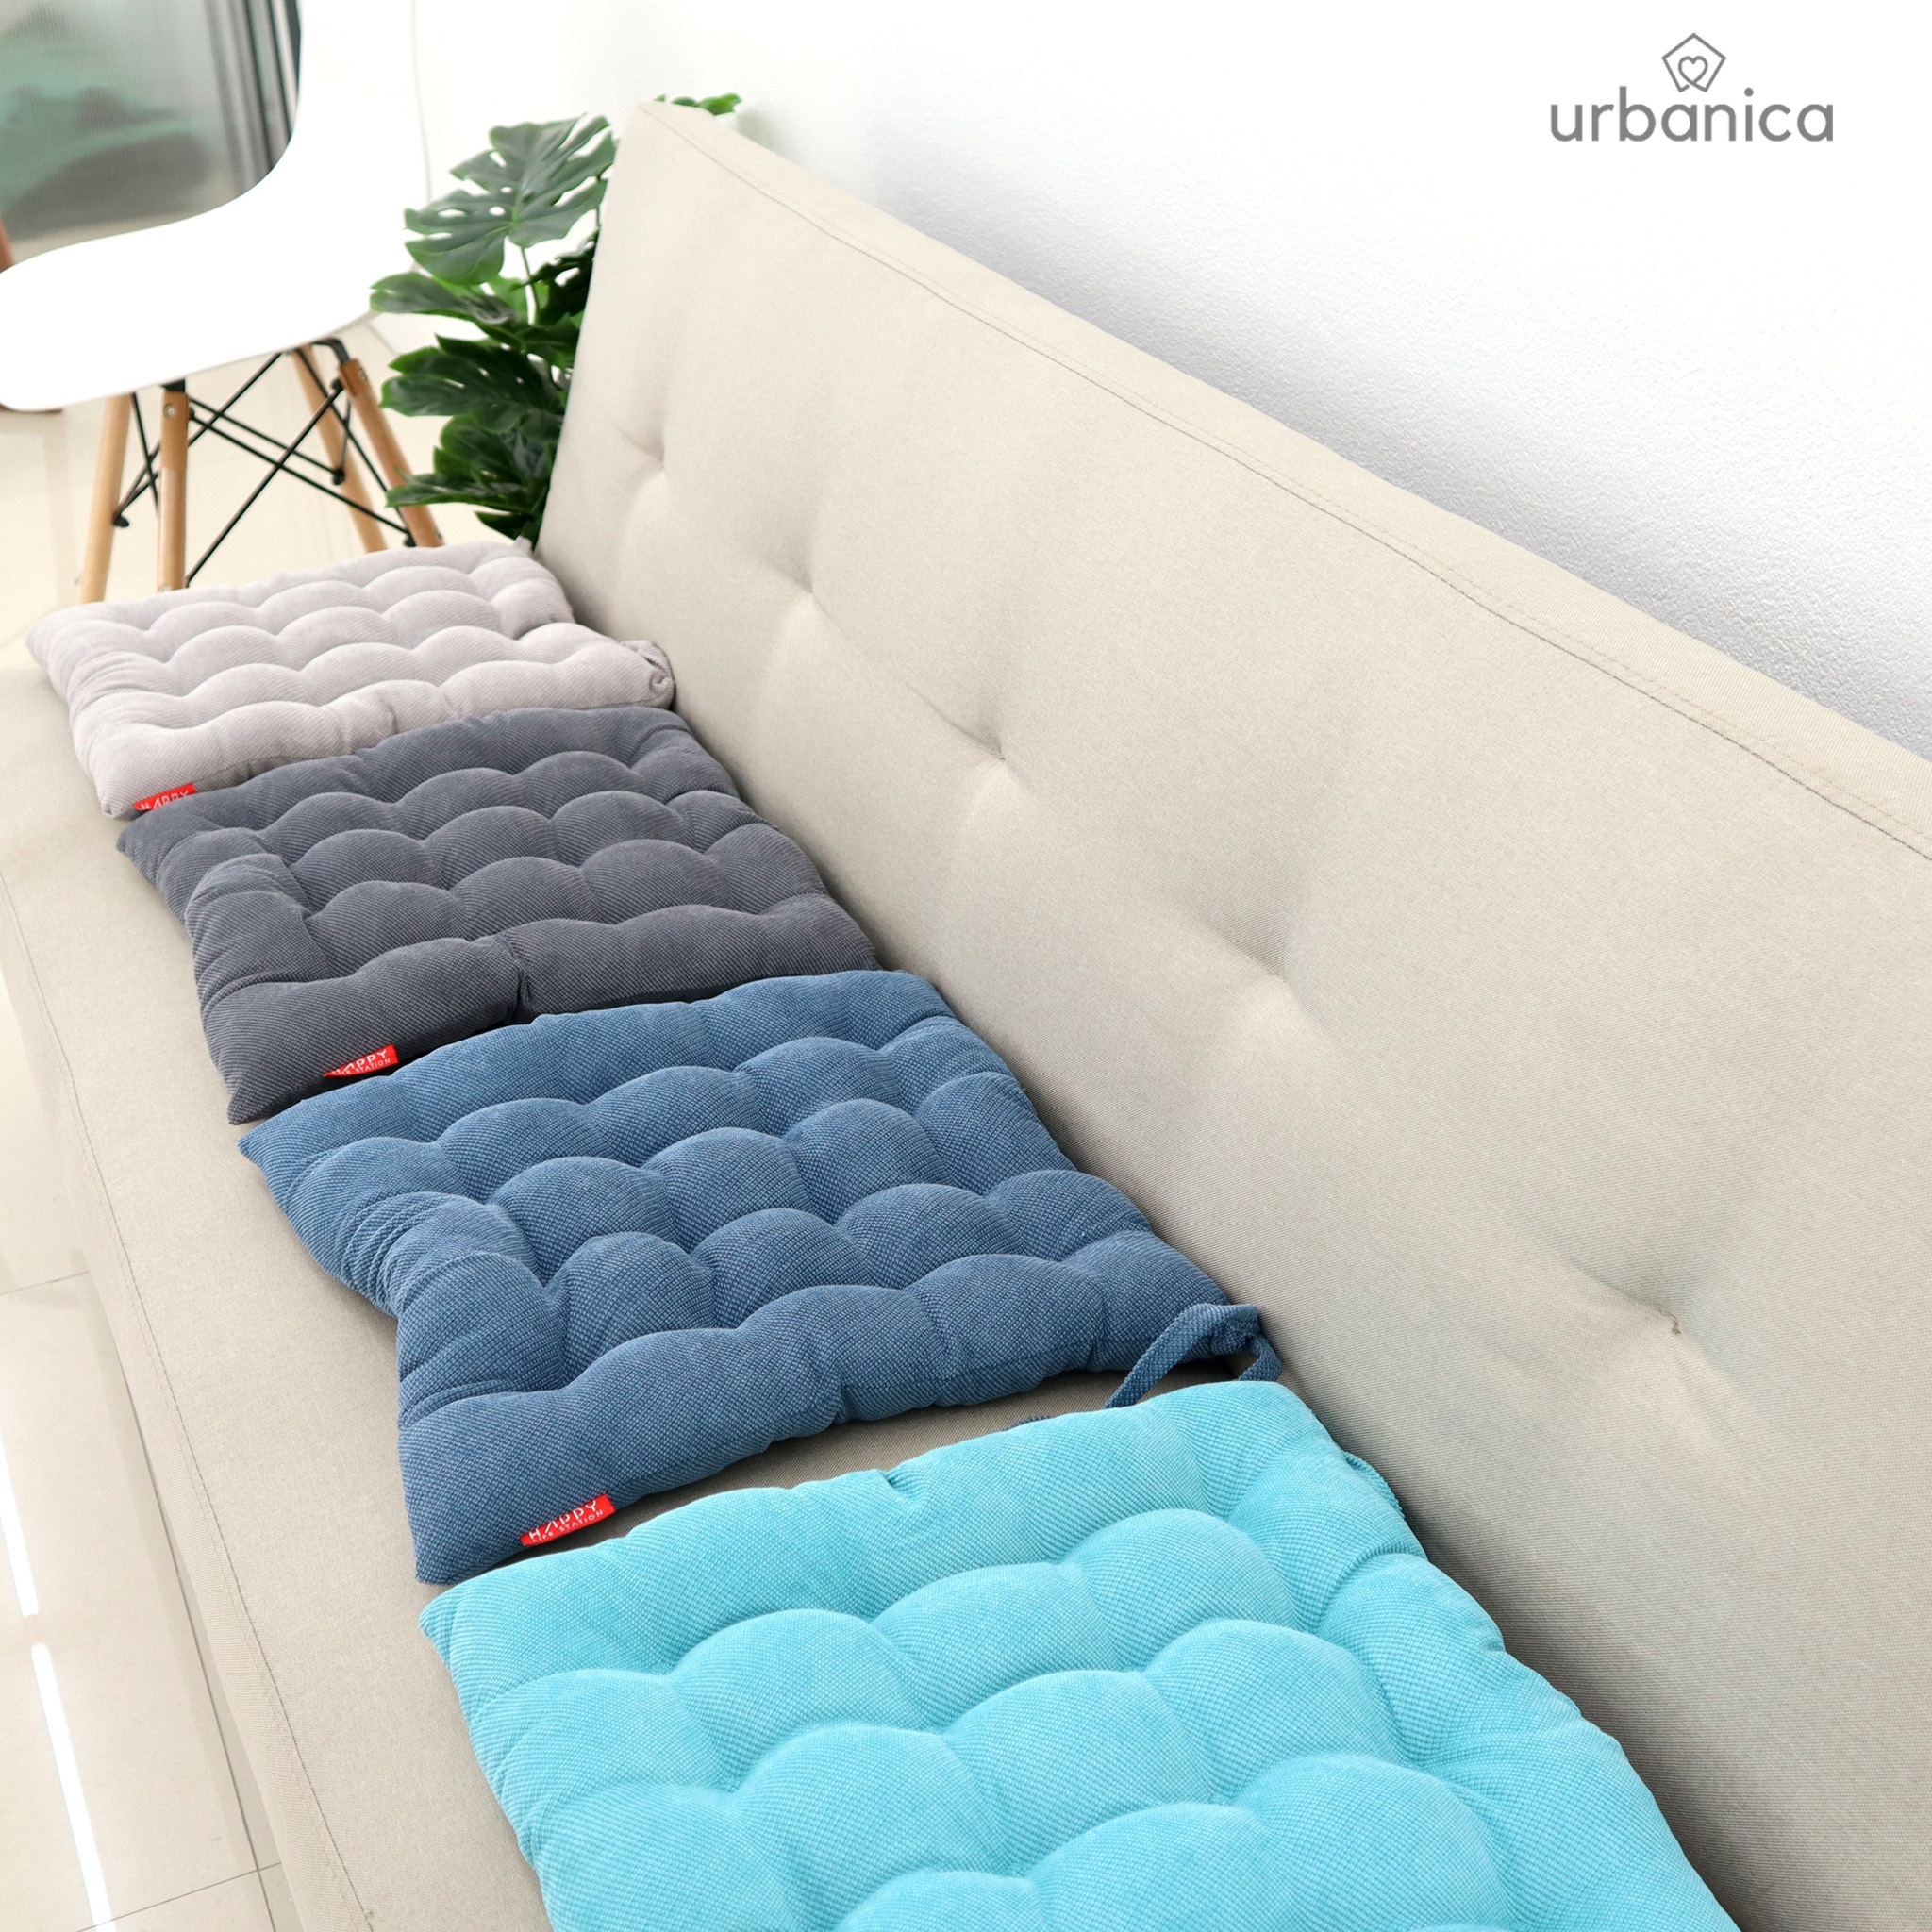 Urbanica เบาะรองนั่ง Nordic style size 40x40 cm  variation3 Light Gray